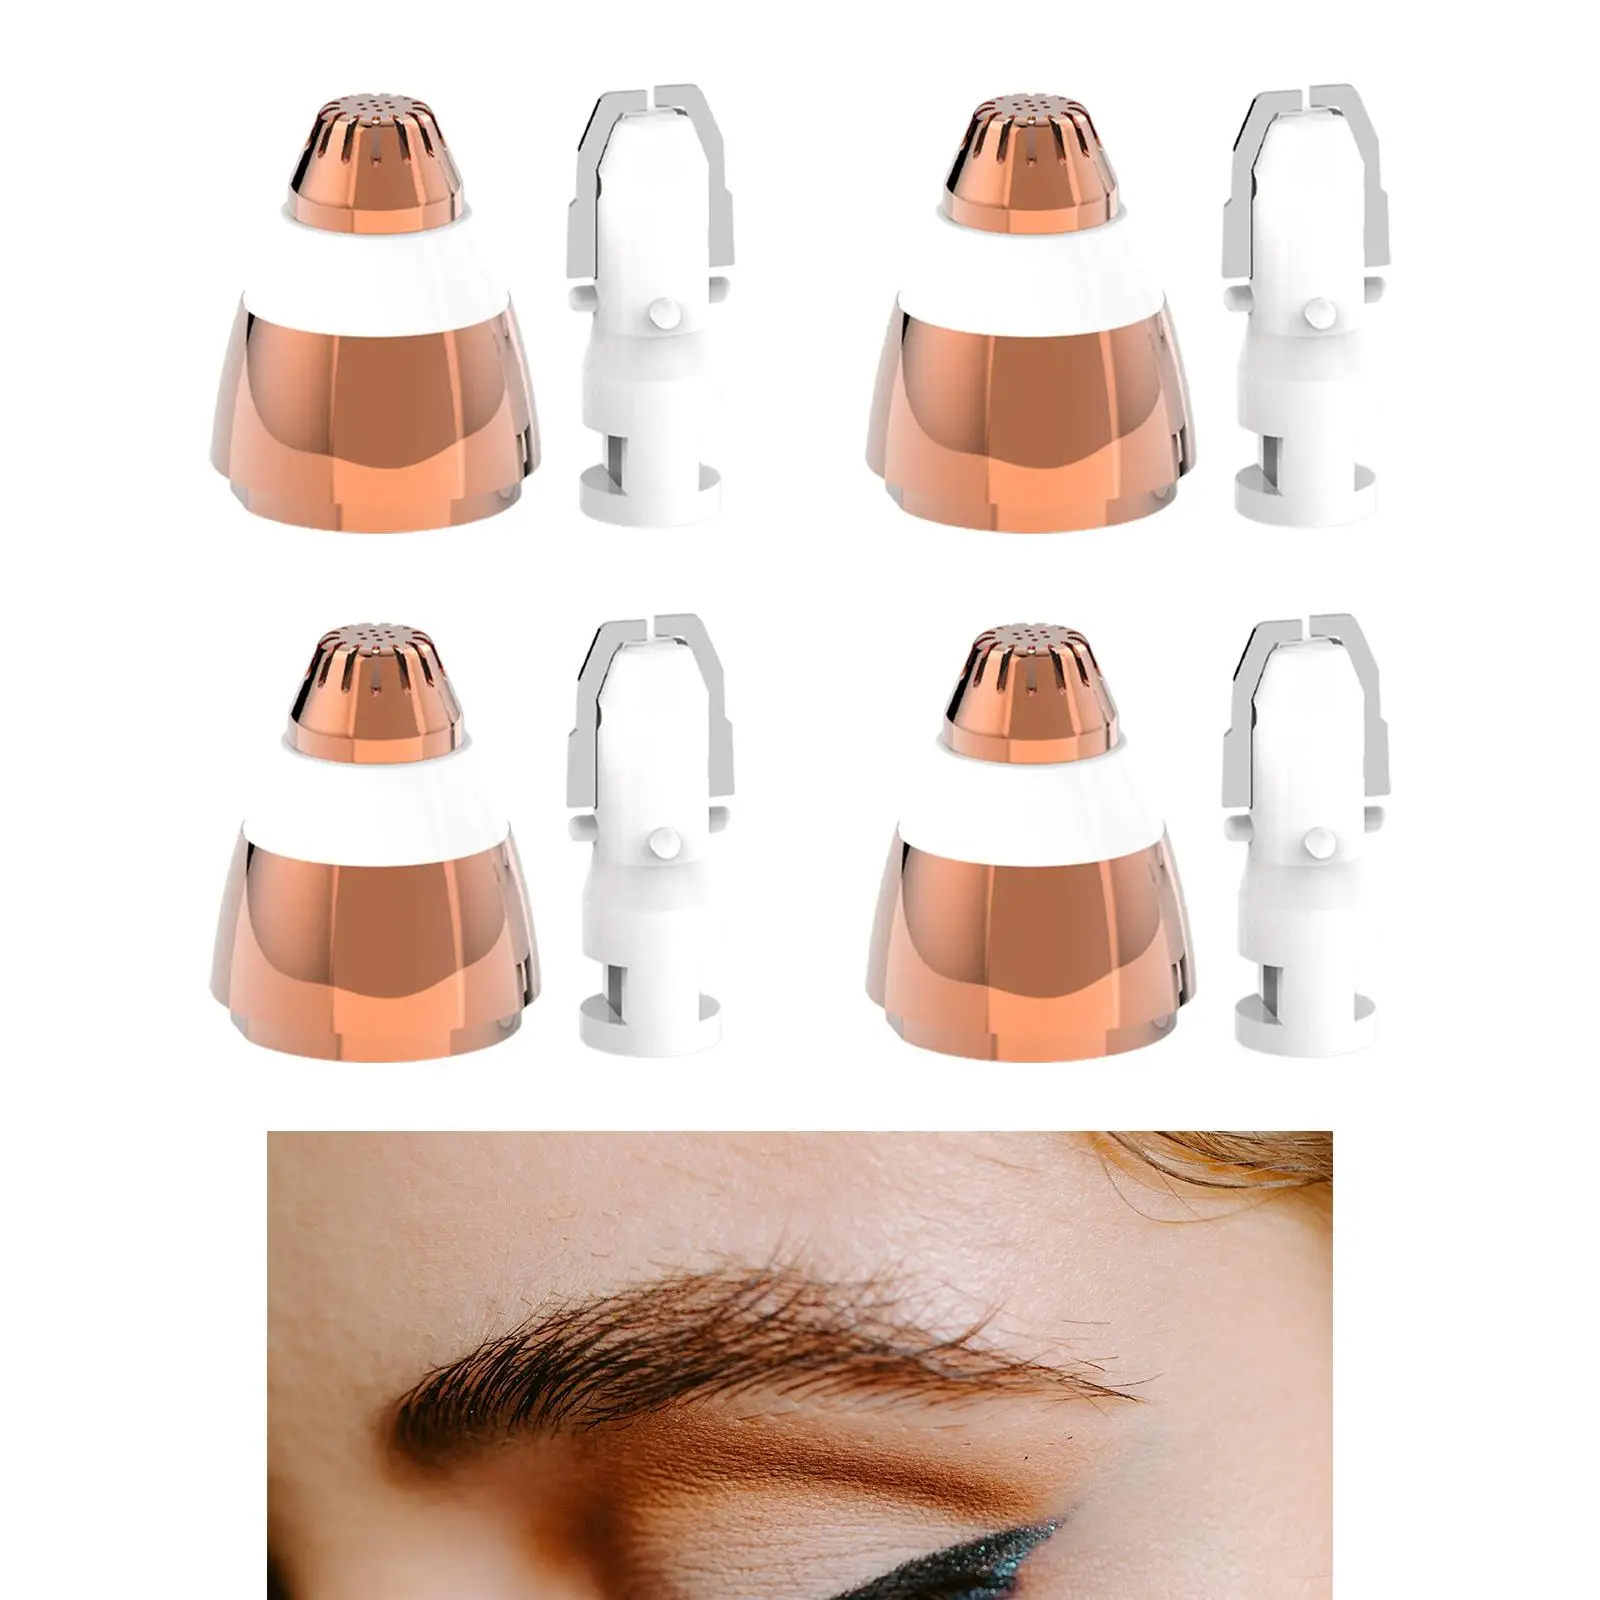 4 Sets Eyebrow Trimmer Replacement Heads Eye Brow Epilator Facial Hair Remover Eyebrow Facial Hair Removal Tool Women Supplies